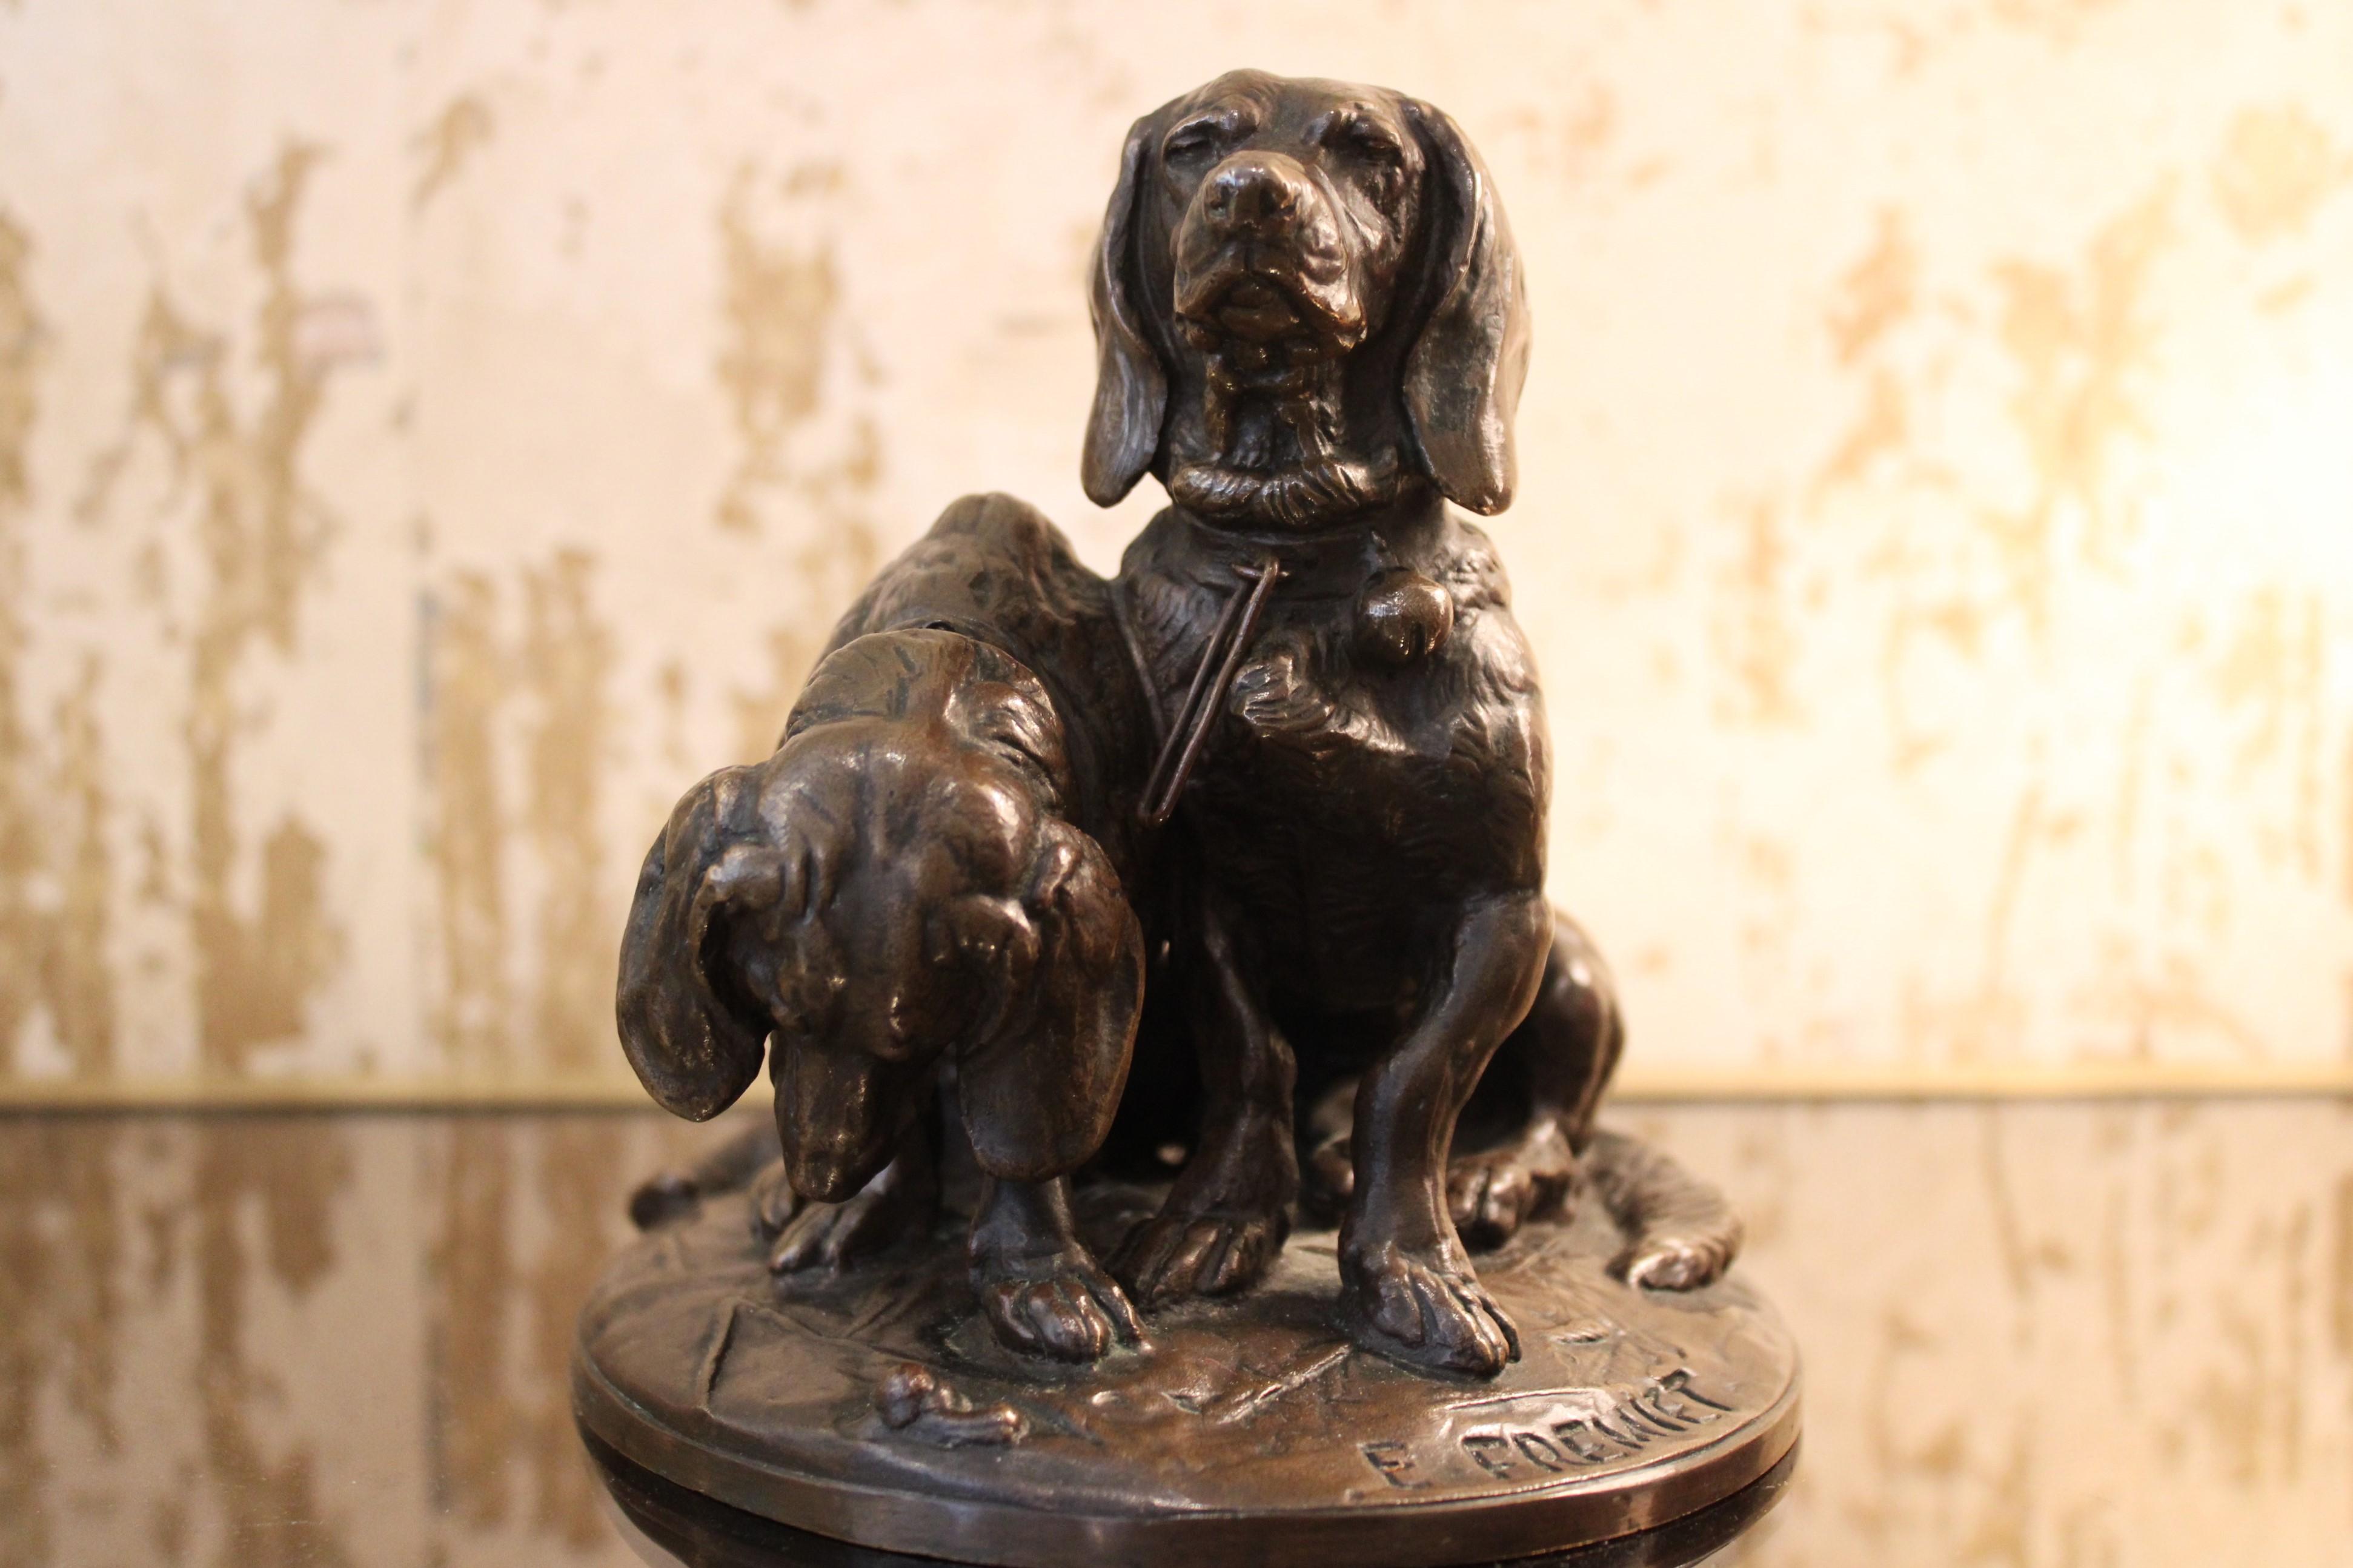 Bronze sculpture of two bassets hounds (Ravageot et Ravageode) by Emmanuel Frémiet
Signed
France, early 19th century